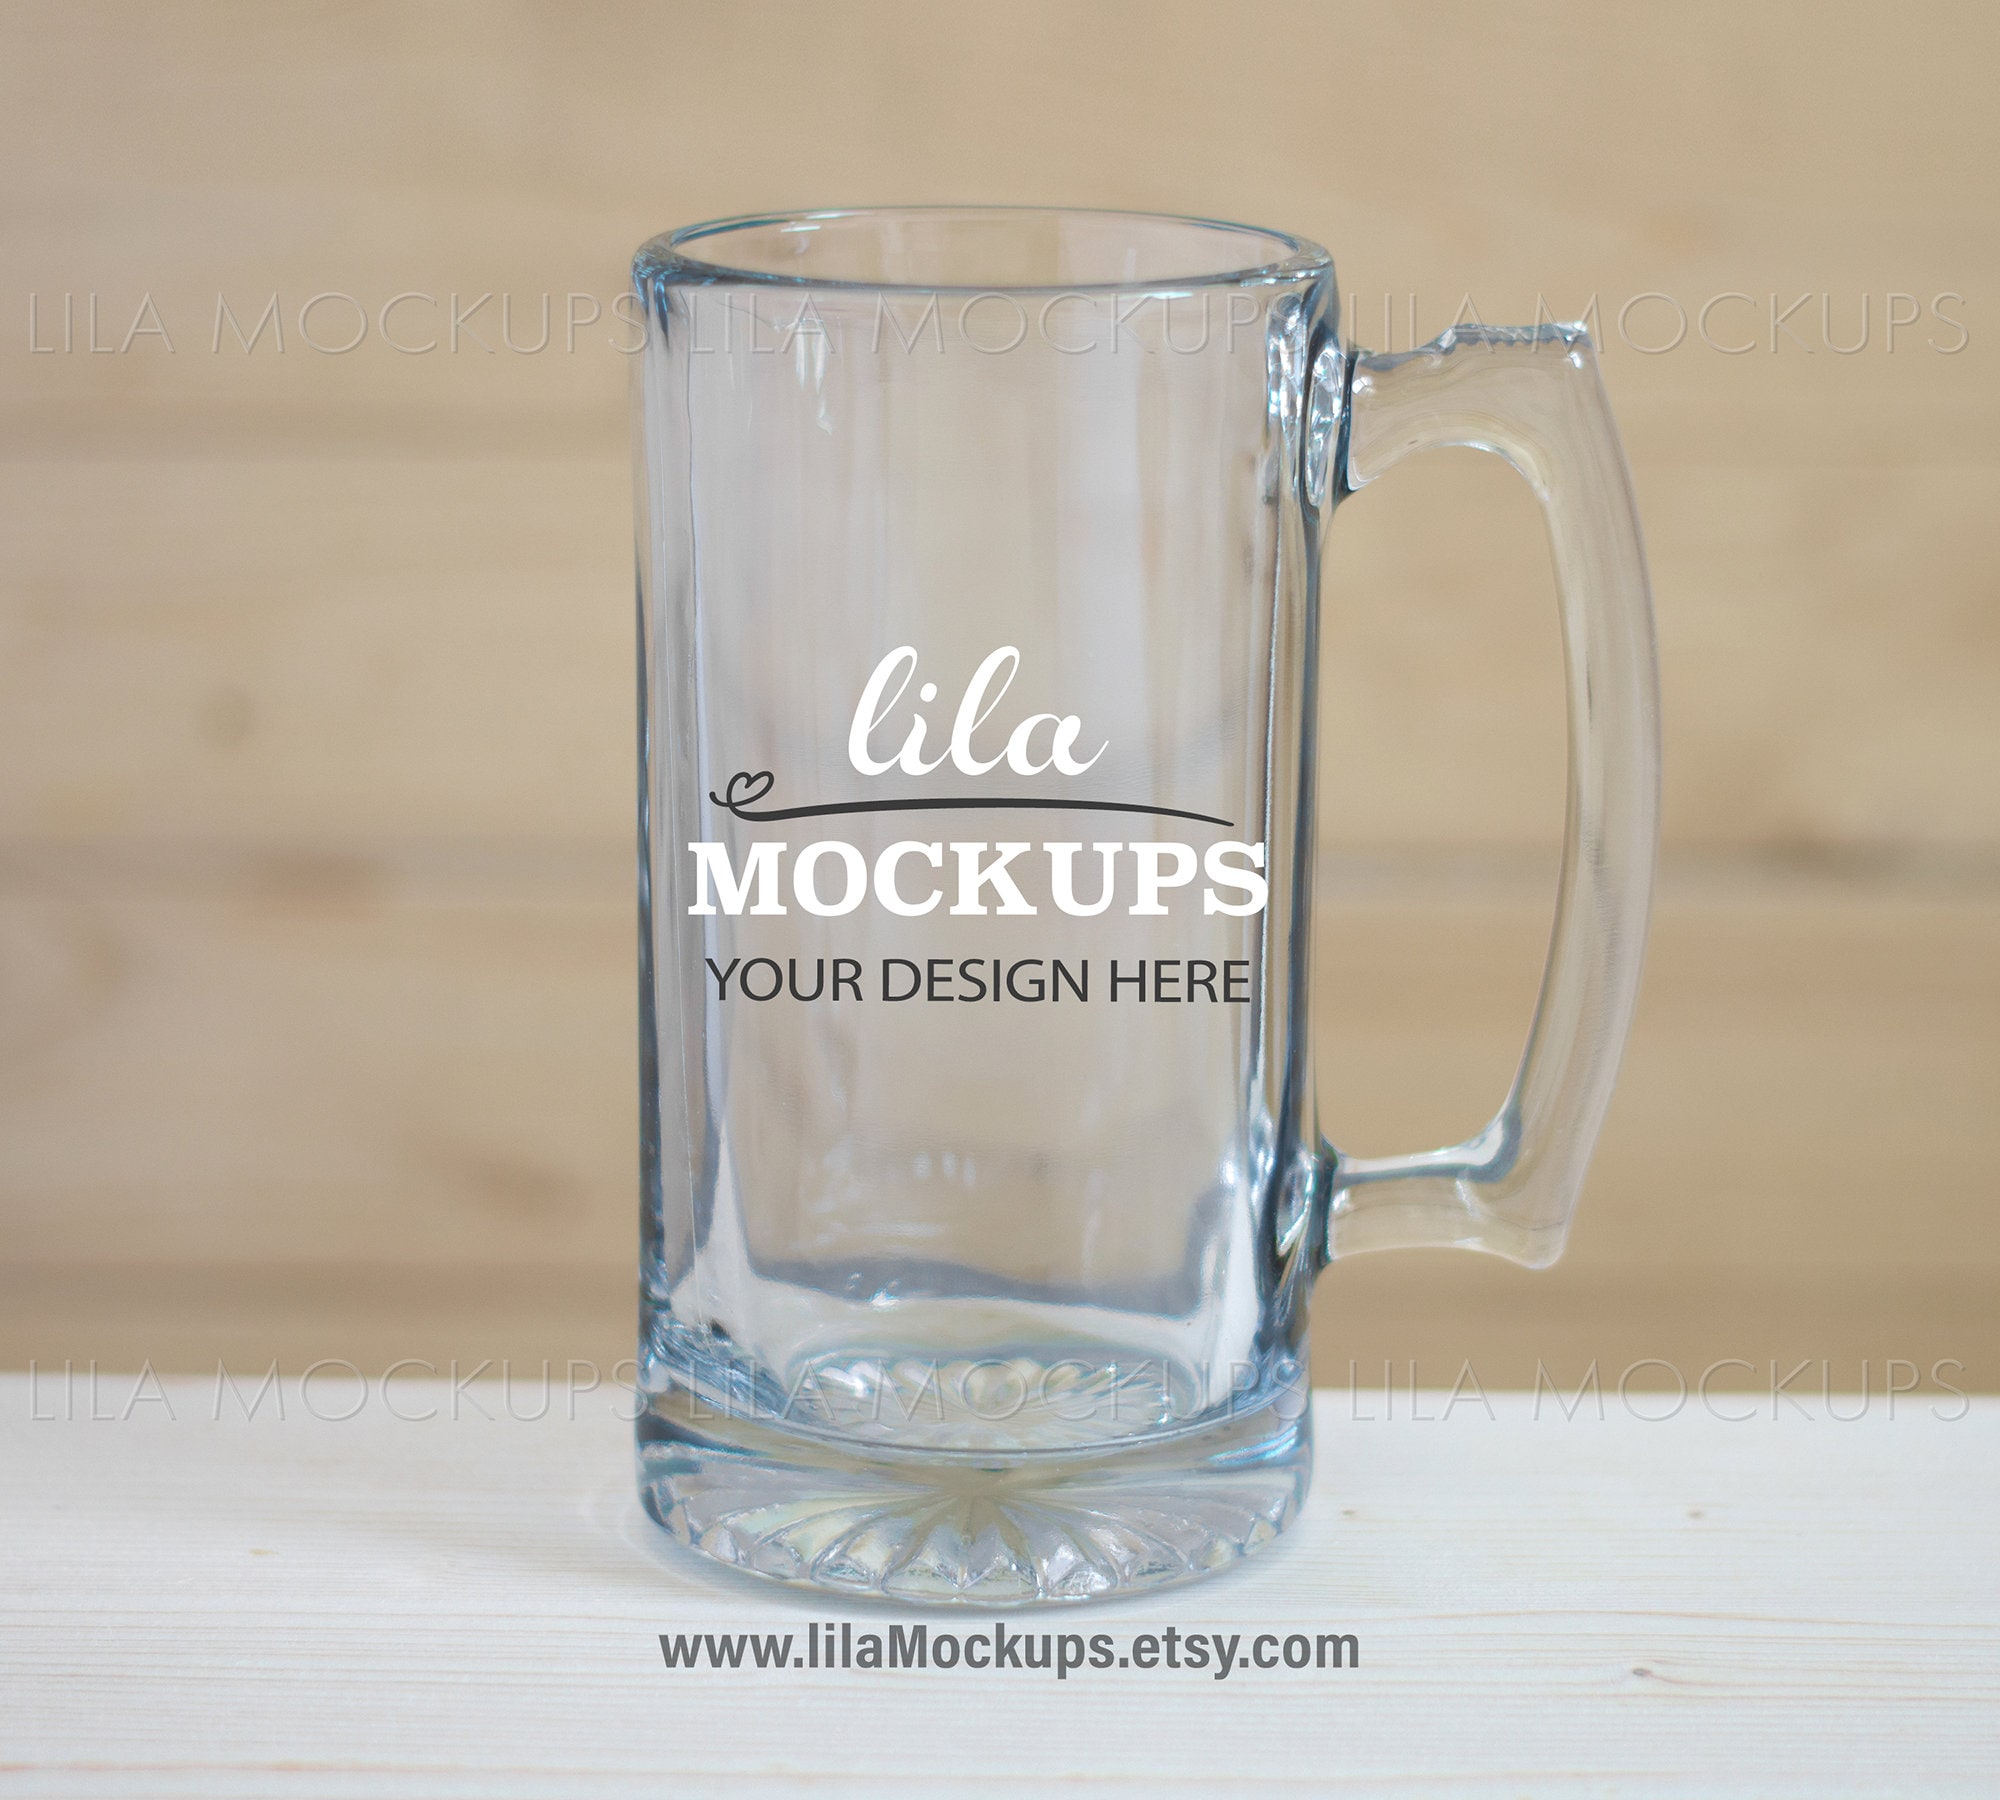 Download Beer Mug Mockup Photo Staged Photo Of A Beer Mug Or Glass Etsy